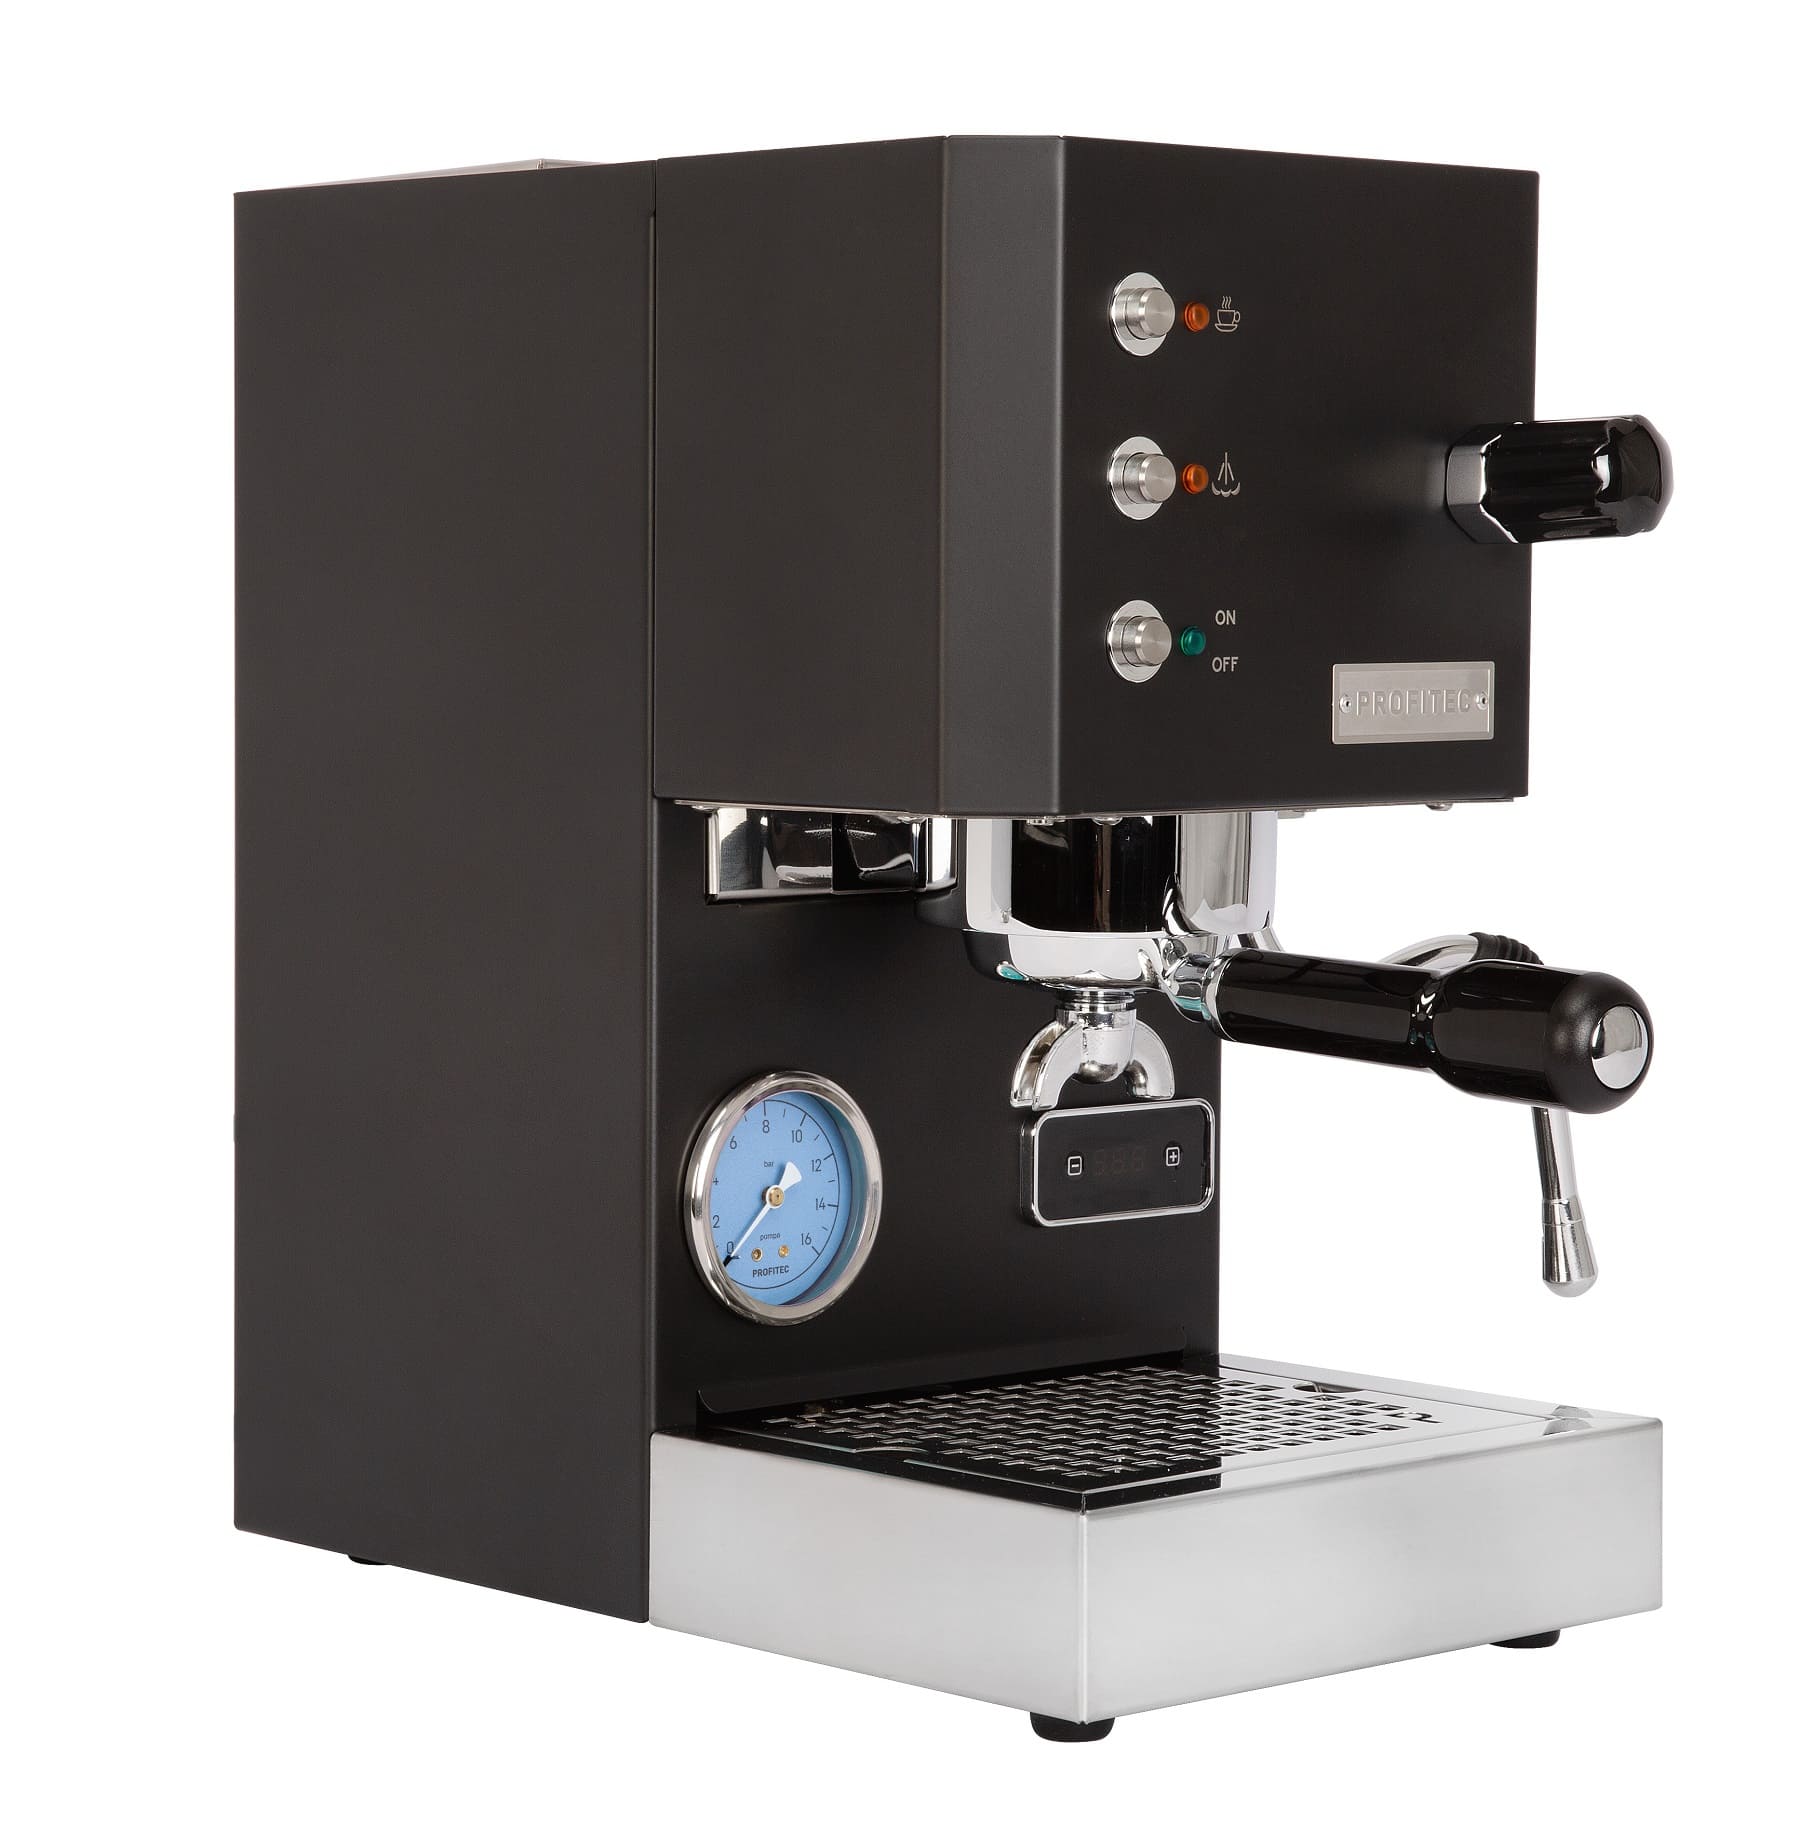 Profitec GO Pro 100 Espressomaschine - schwarz